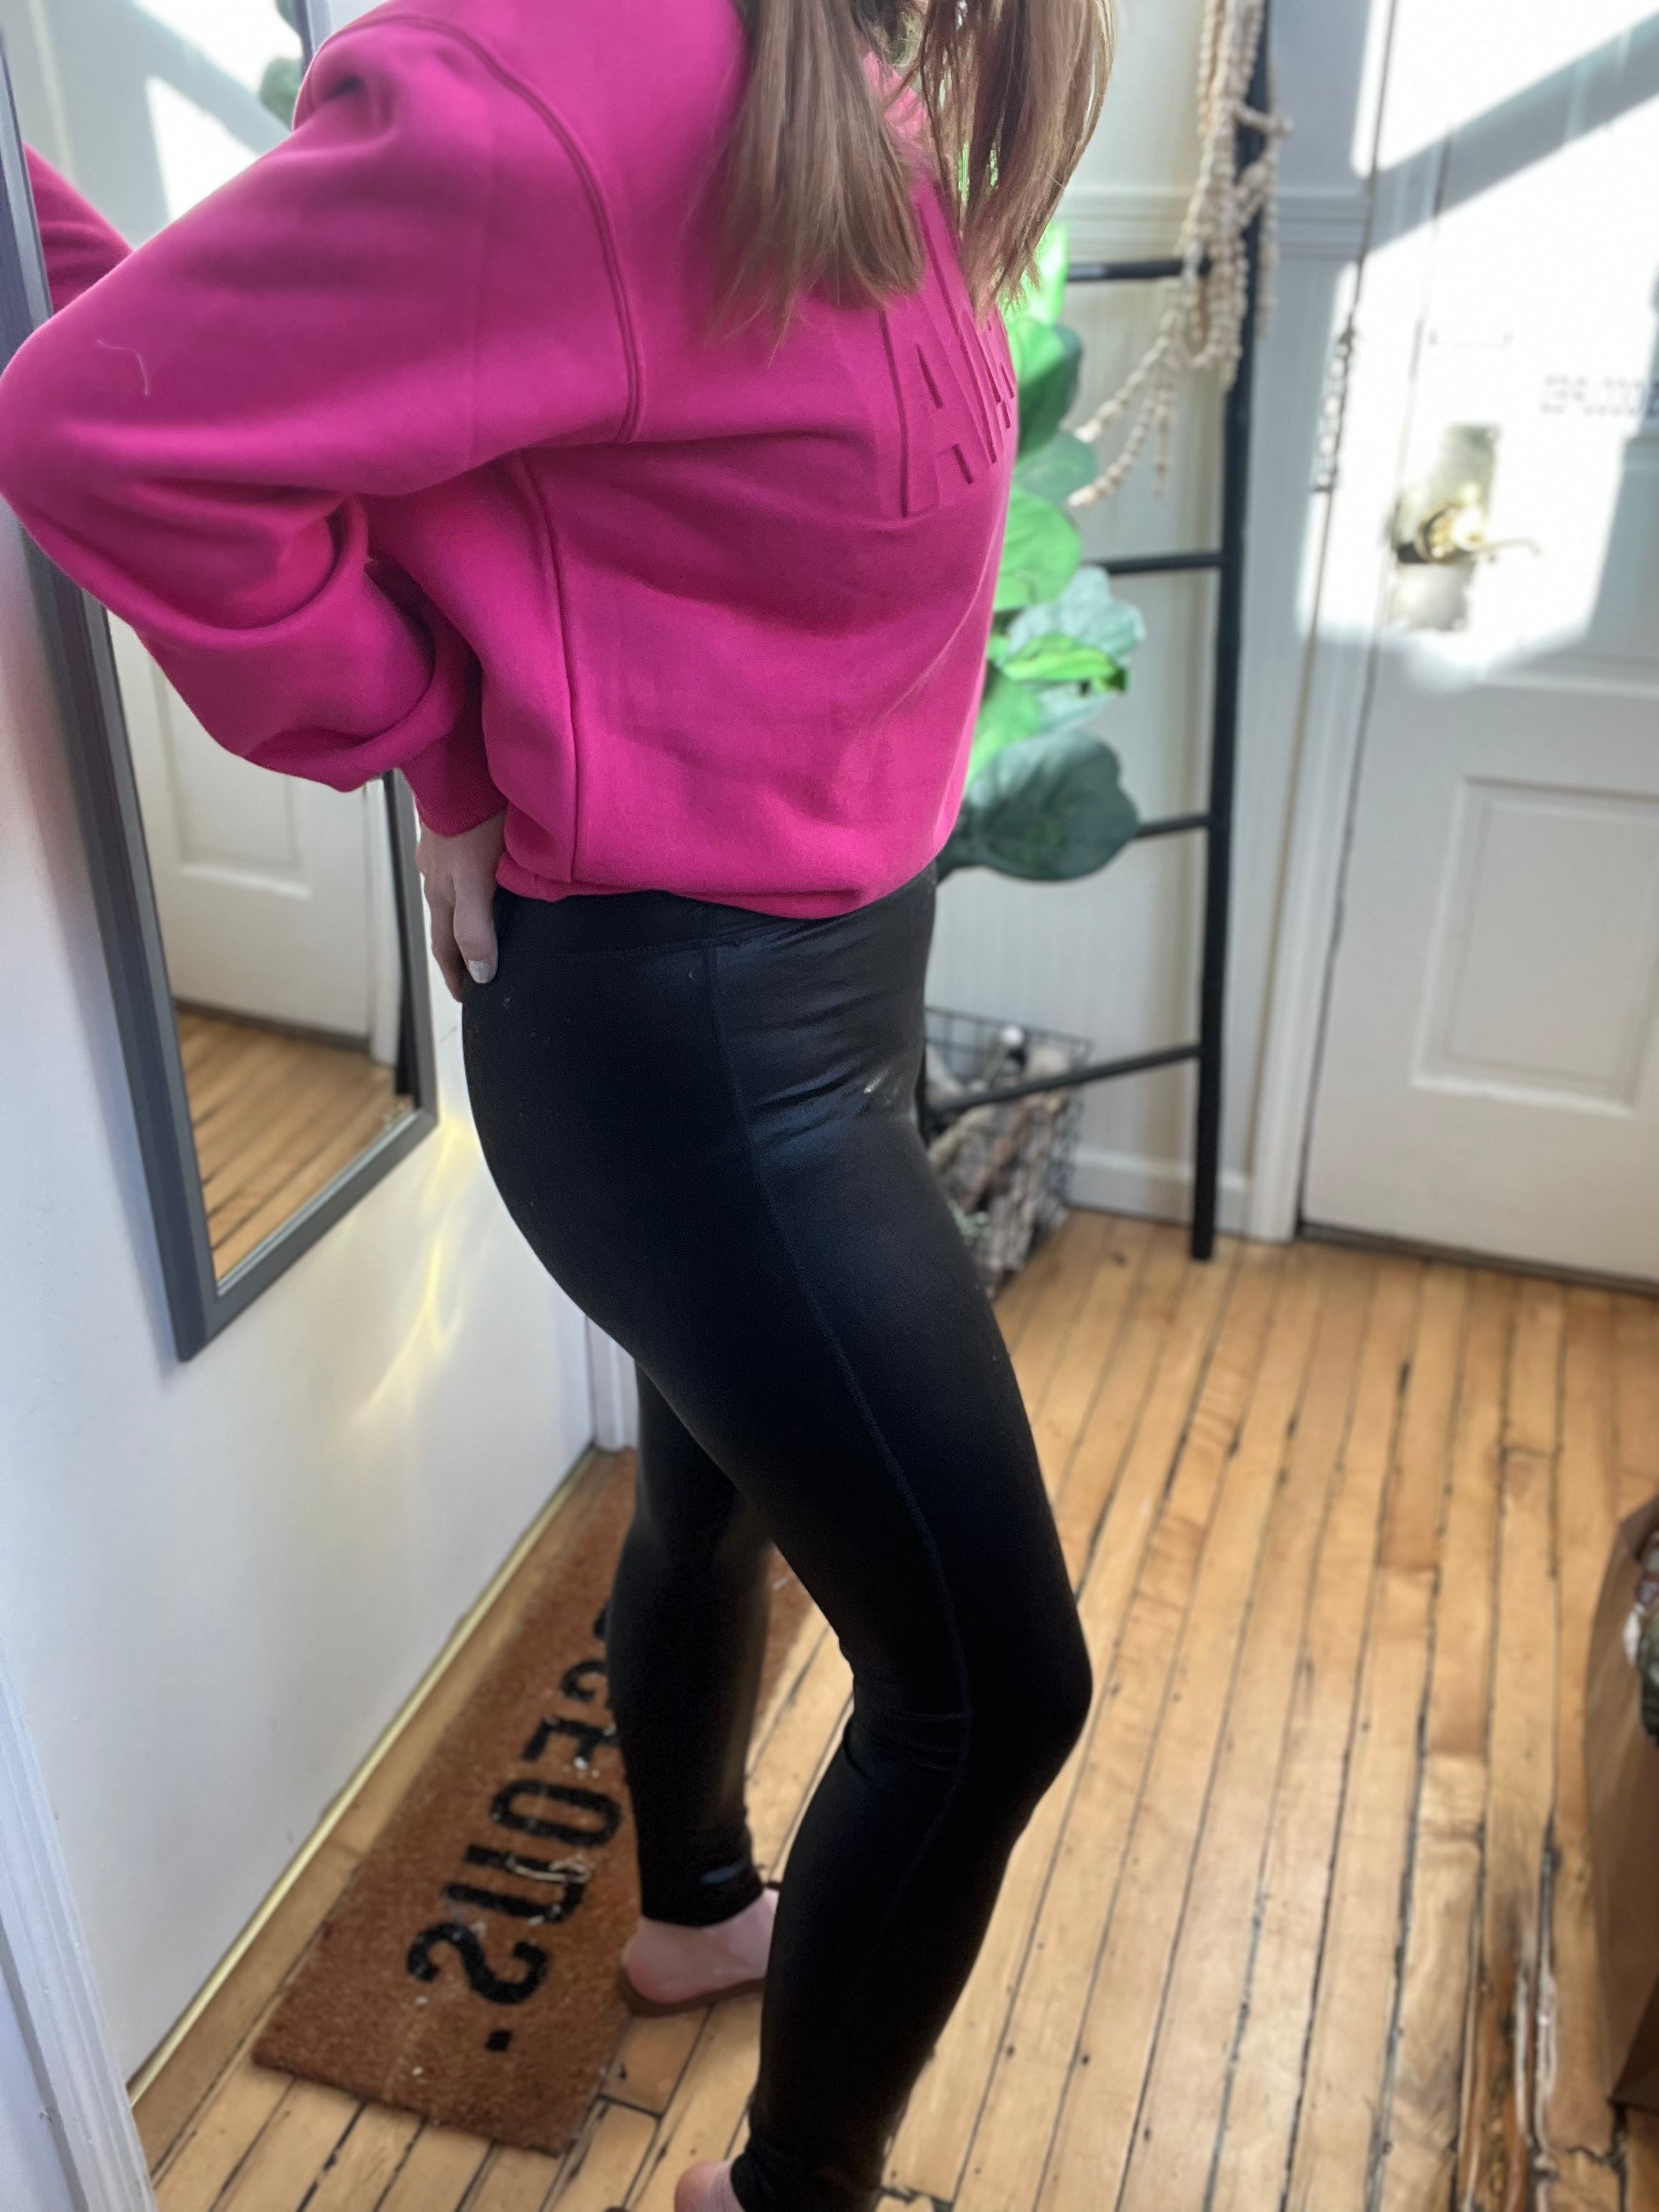 Wild Fable black wet look leggings, XXL NWOT - $16 - From Jessica